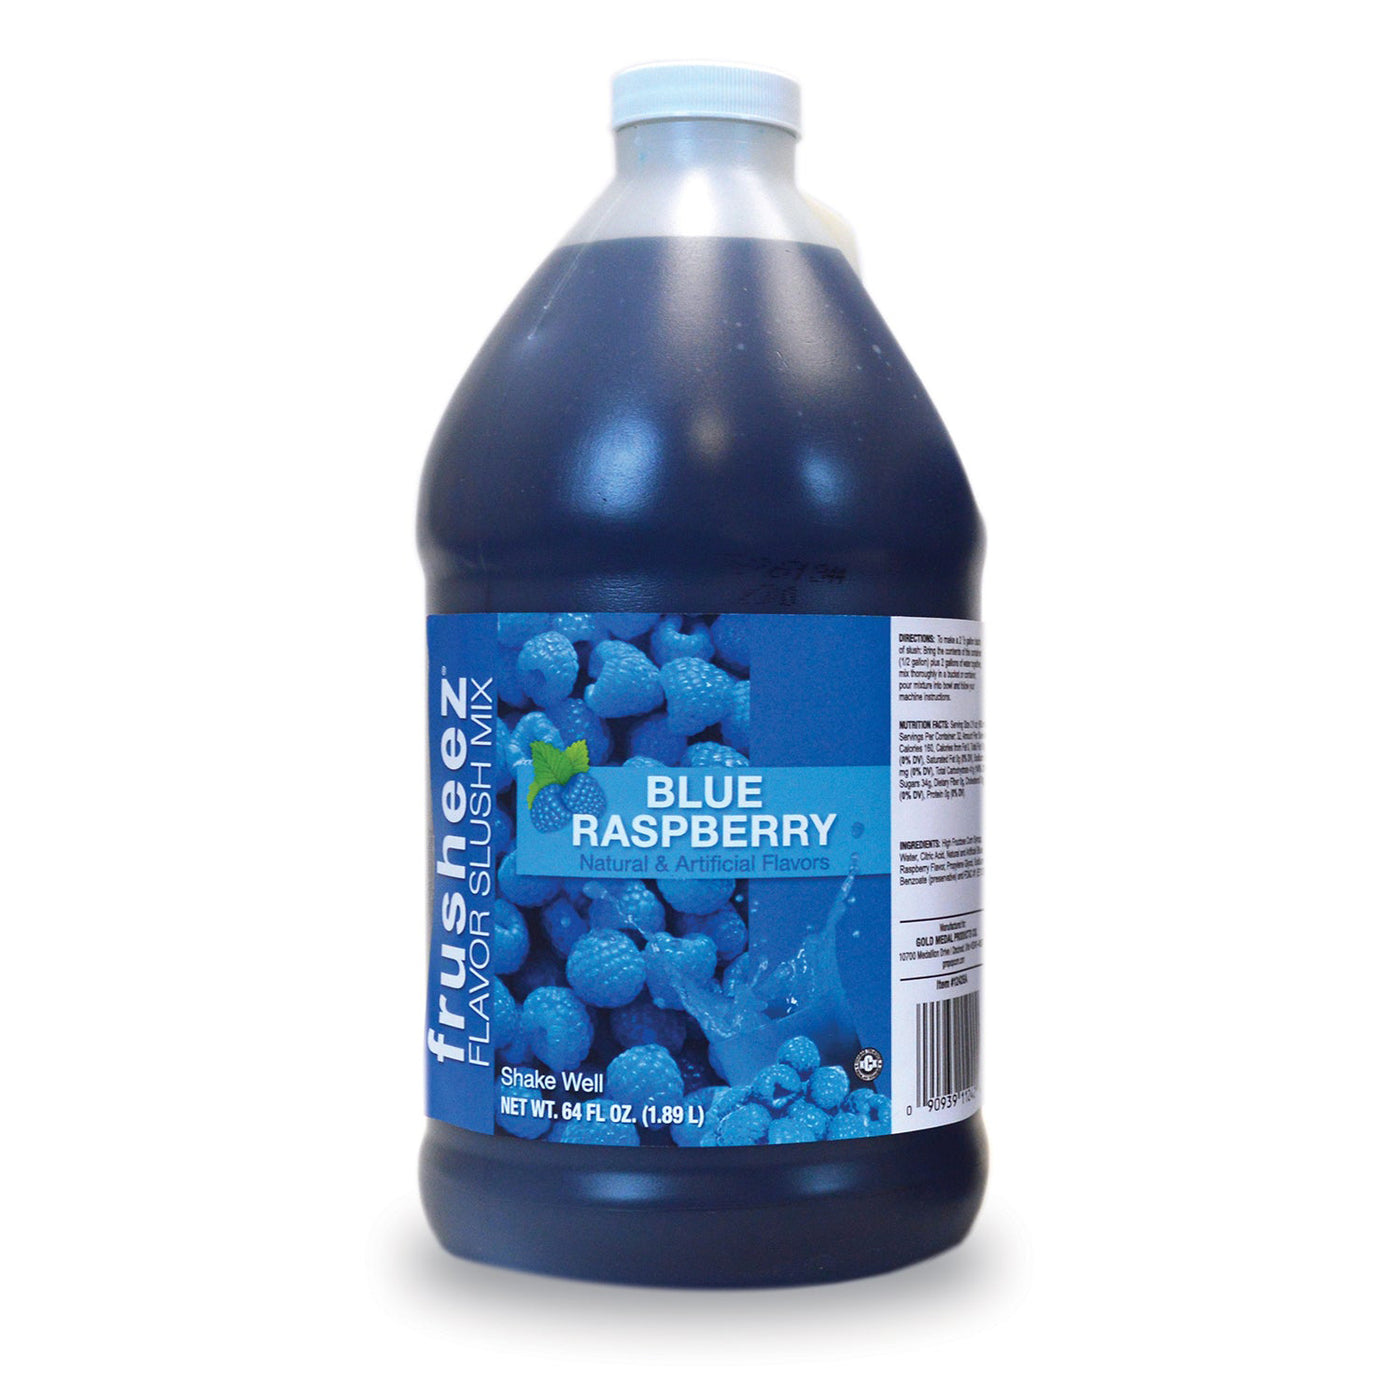 Scented Oil - Blue Raspberry Slushie